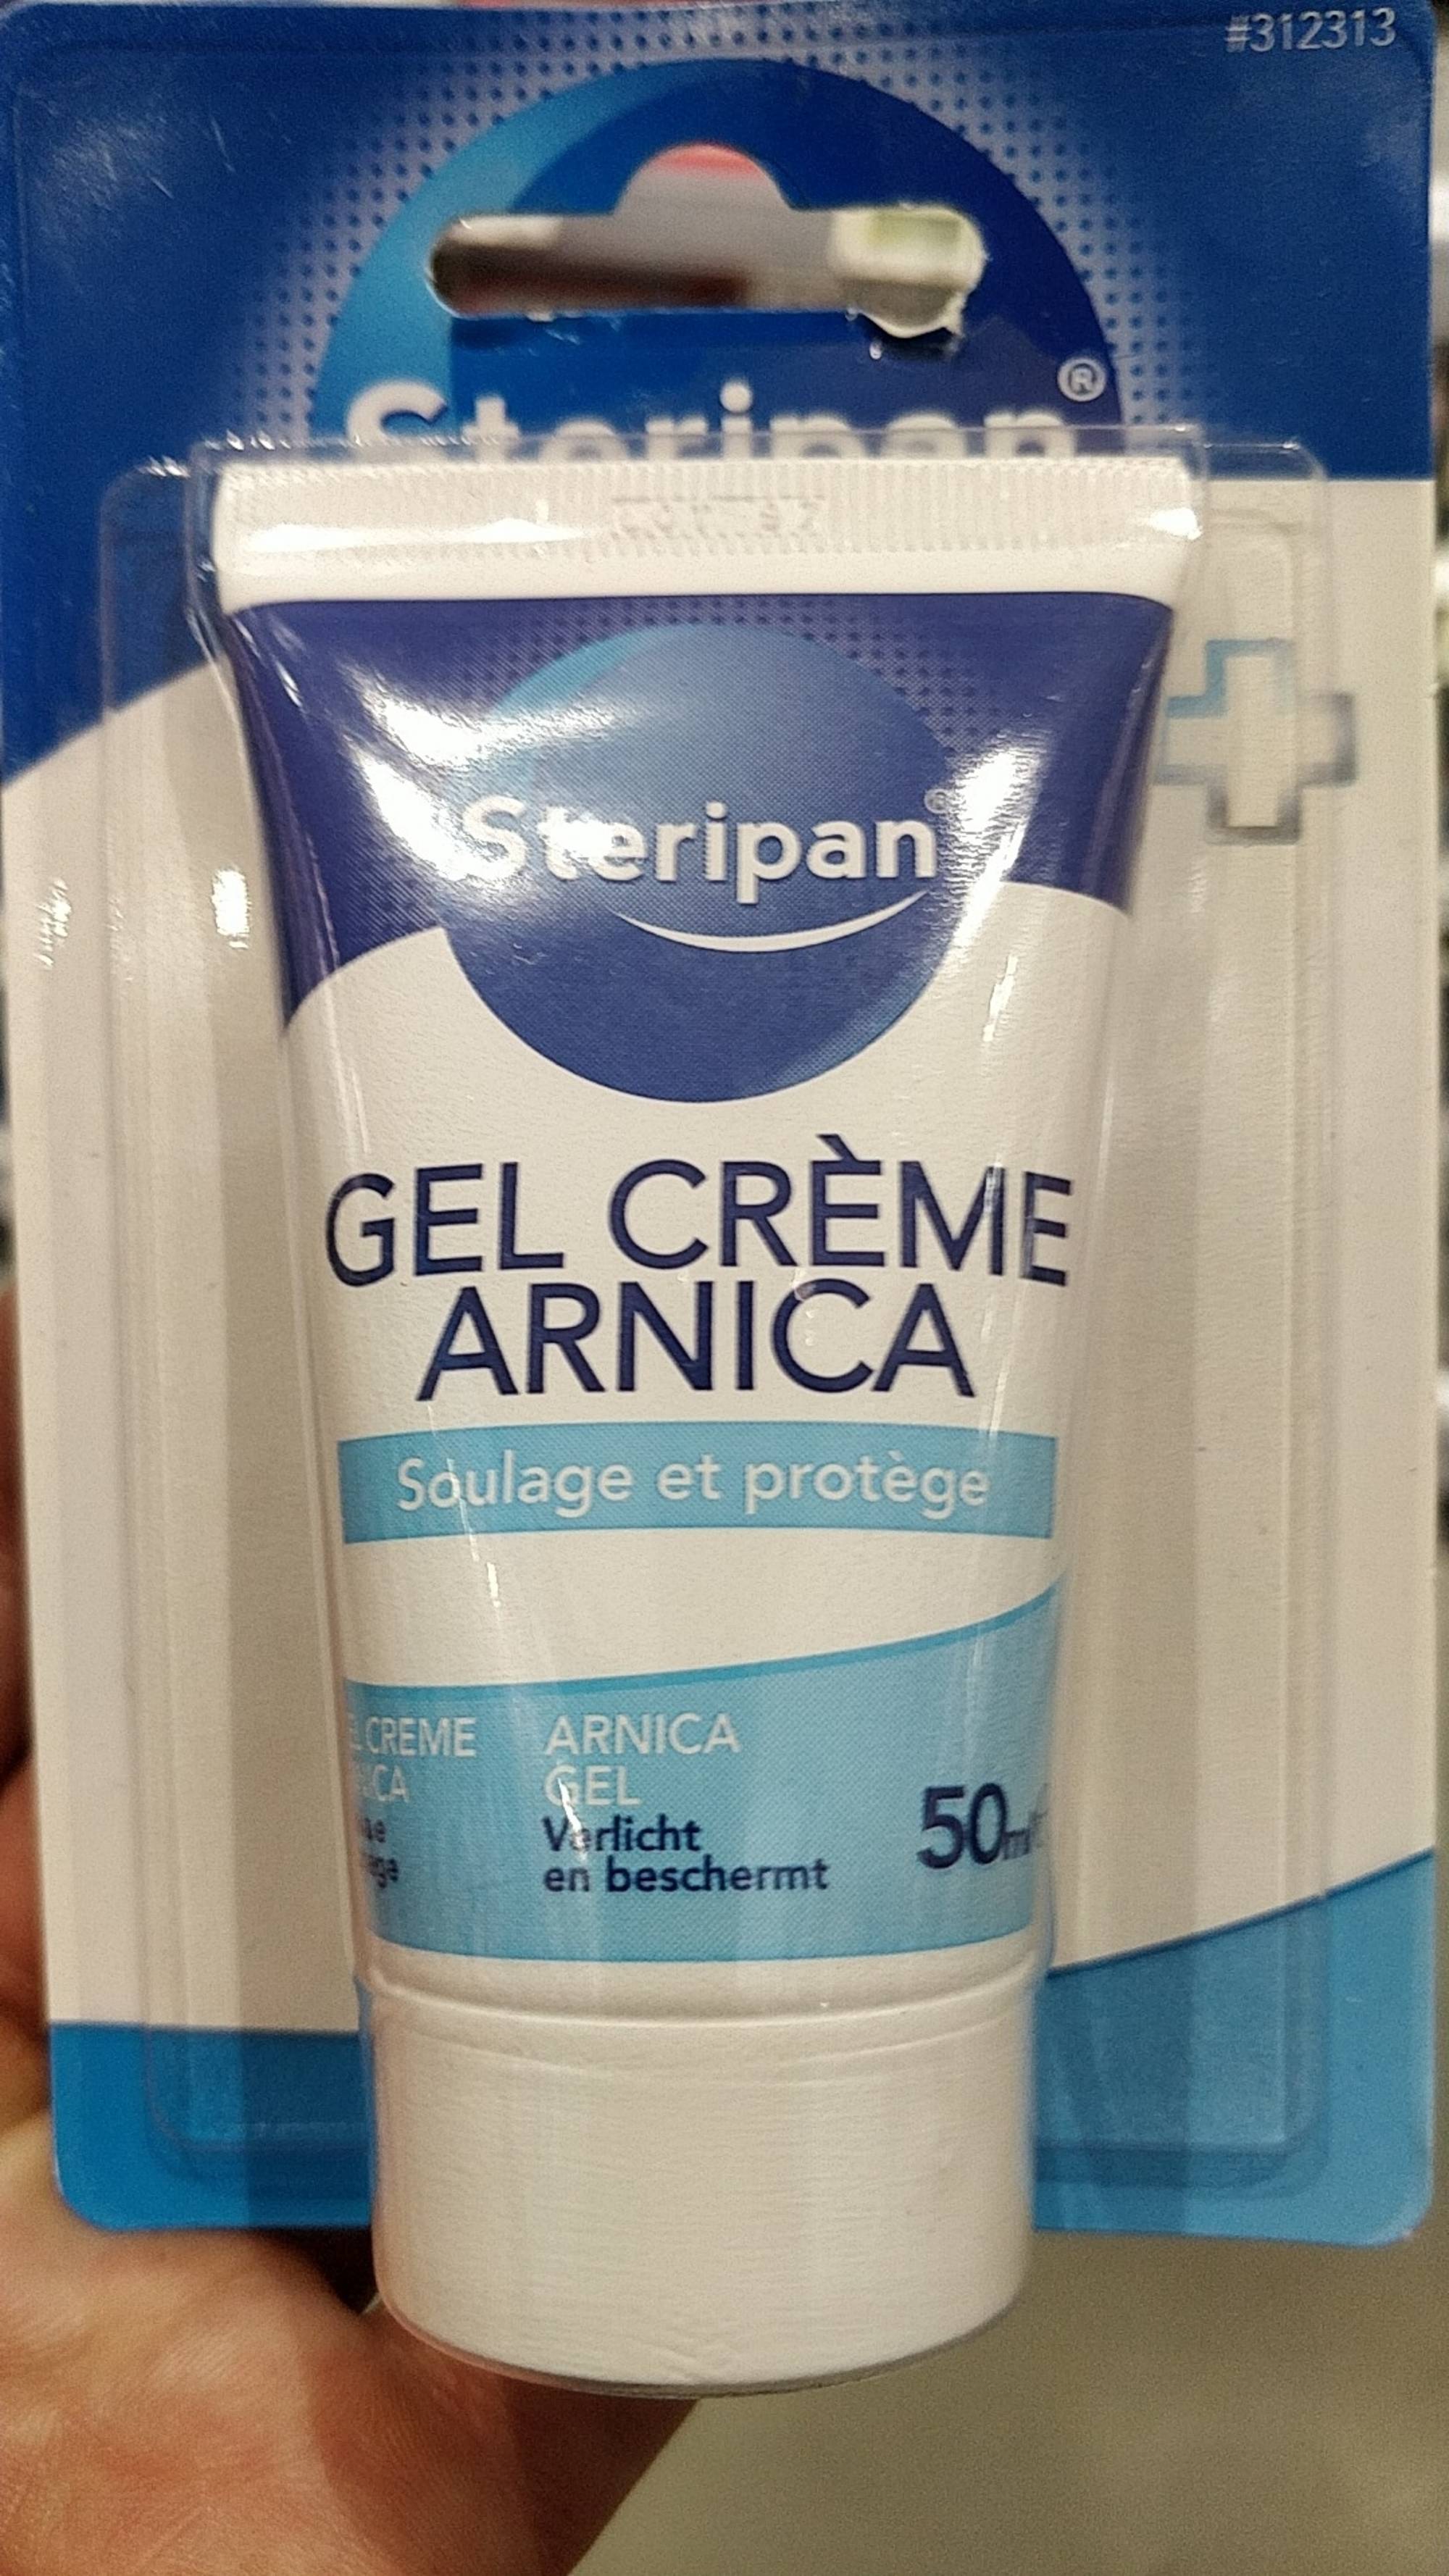 STERIPAN - Soulage et protège - Gel crème arnica